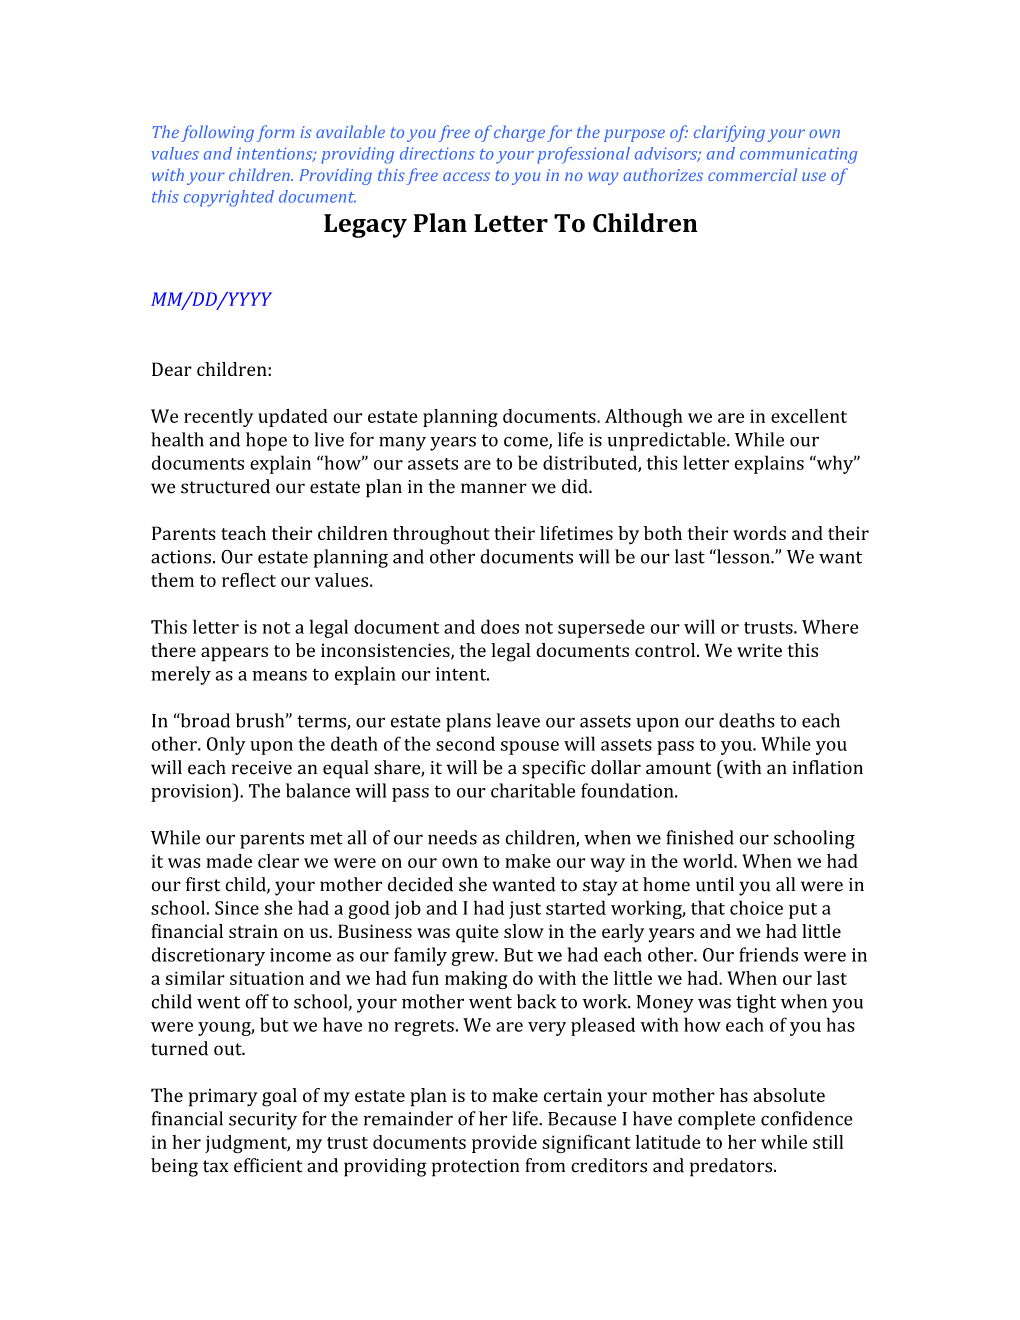 Legacy Plan Letter to Children